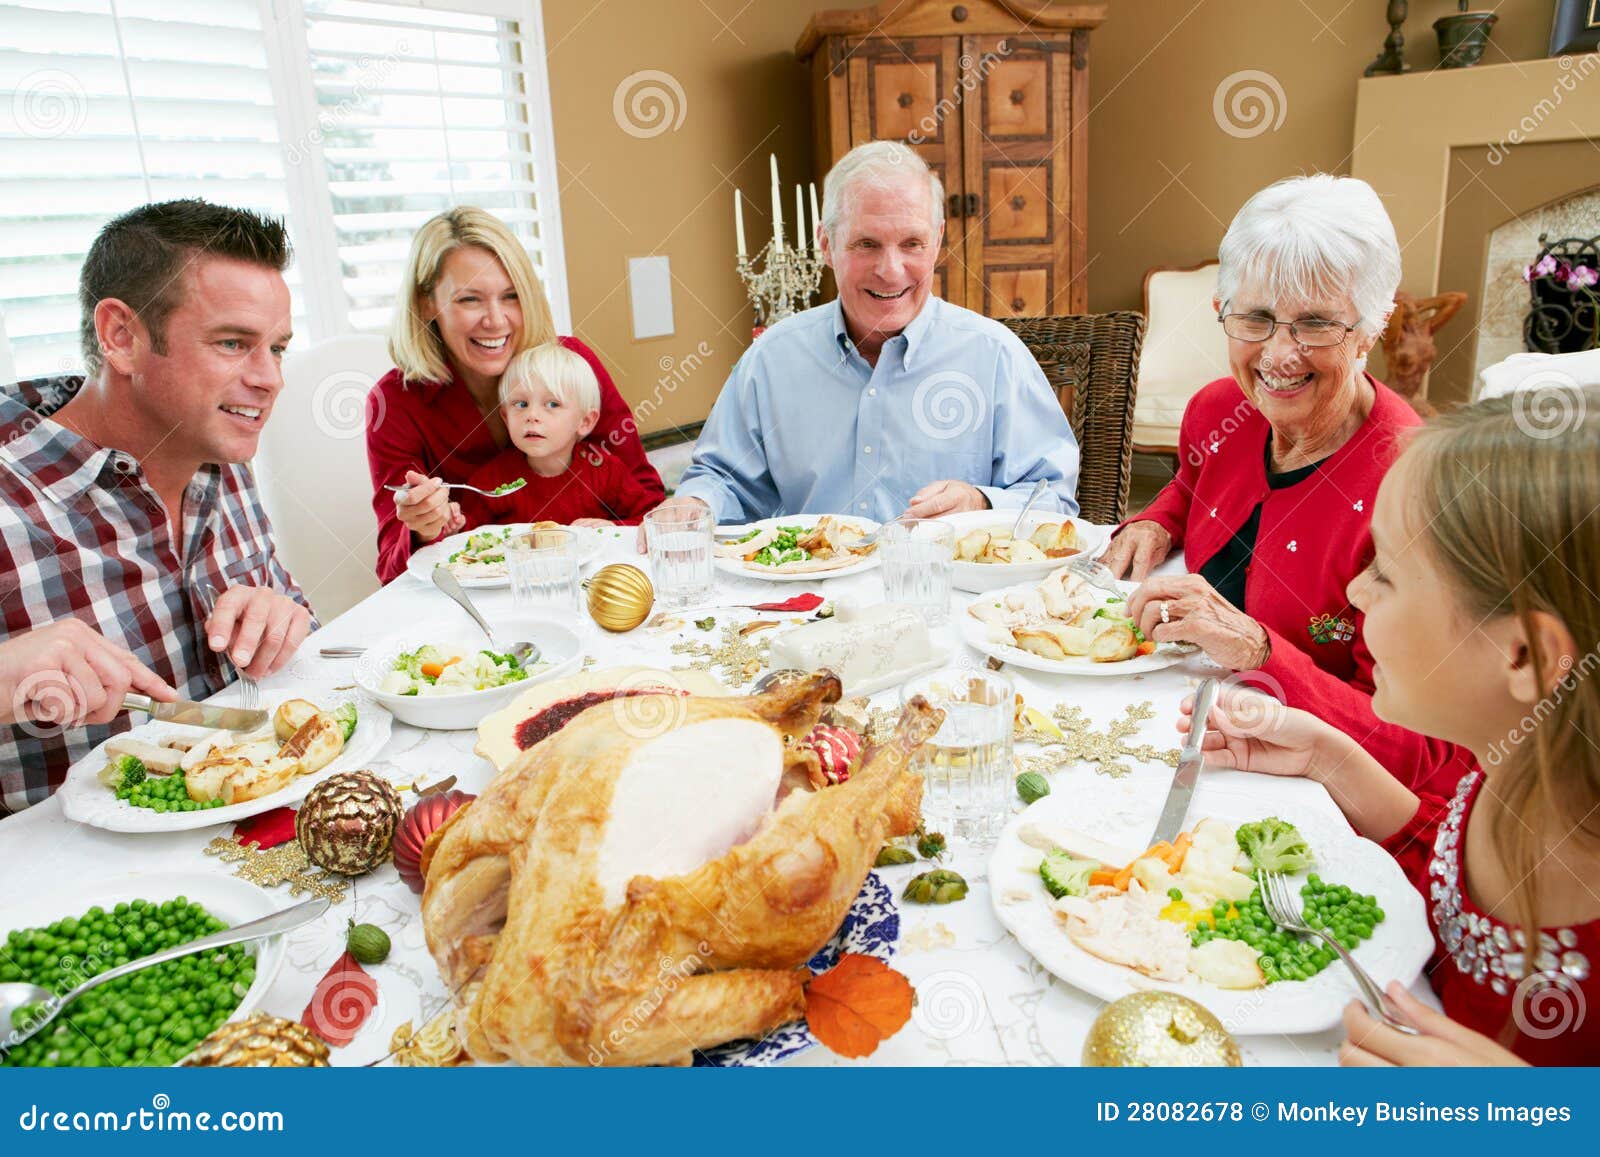 Multi Generation Family Having Christmas Meal Stock Photo - Image of ...